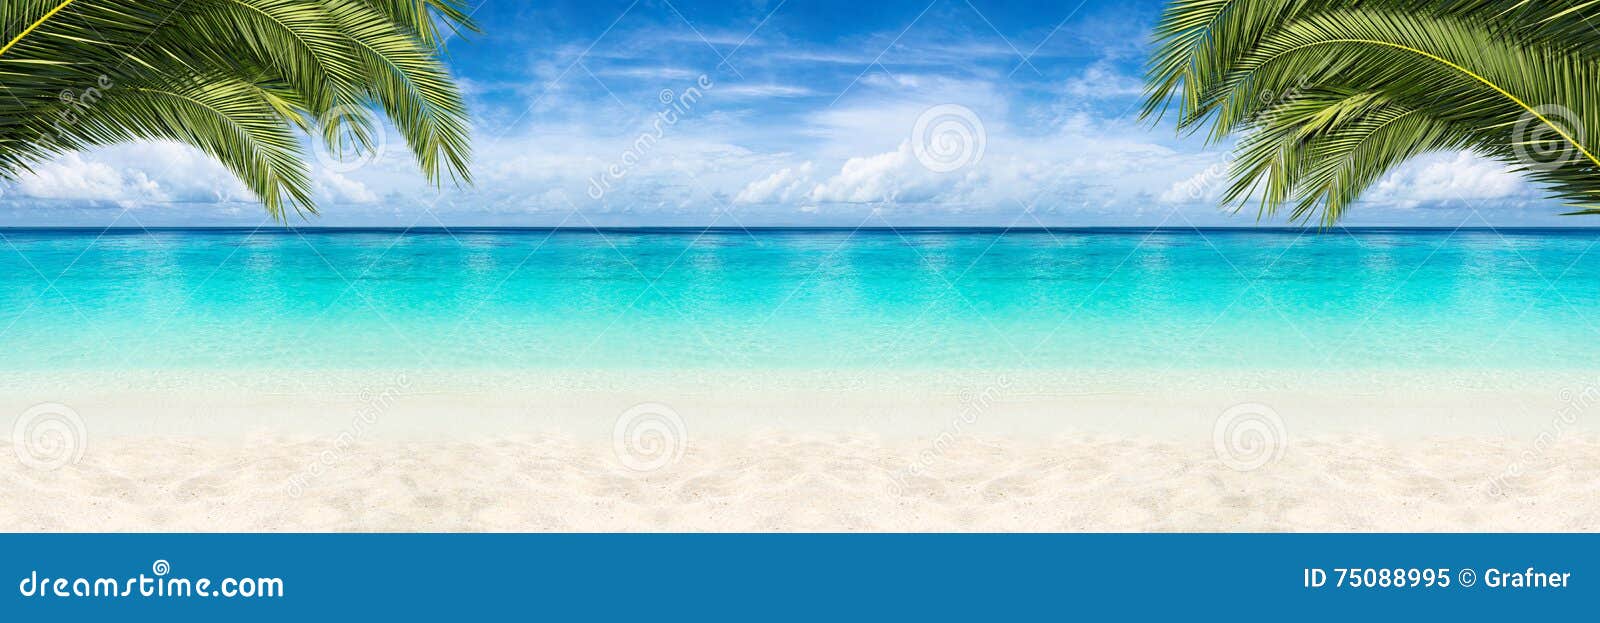 paradise beach background